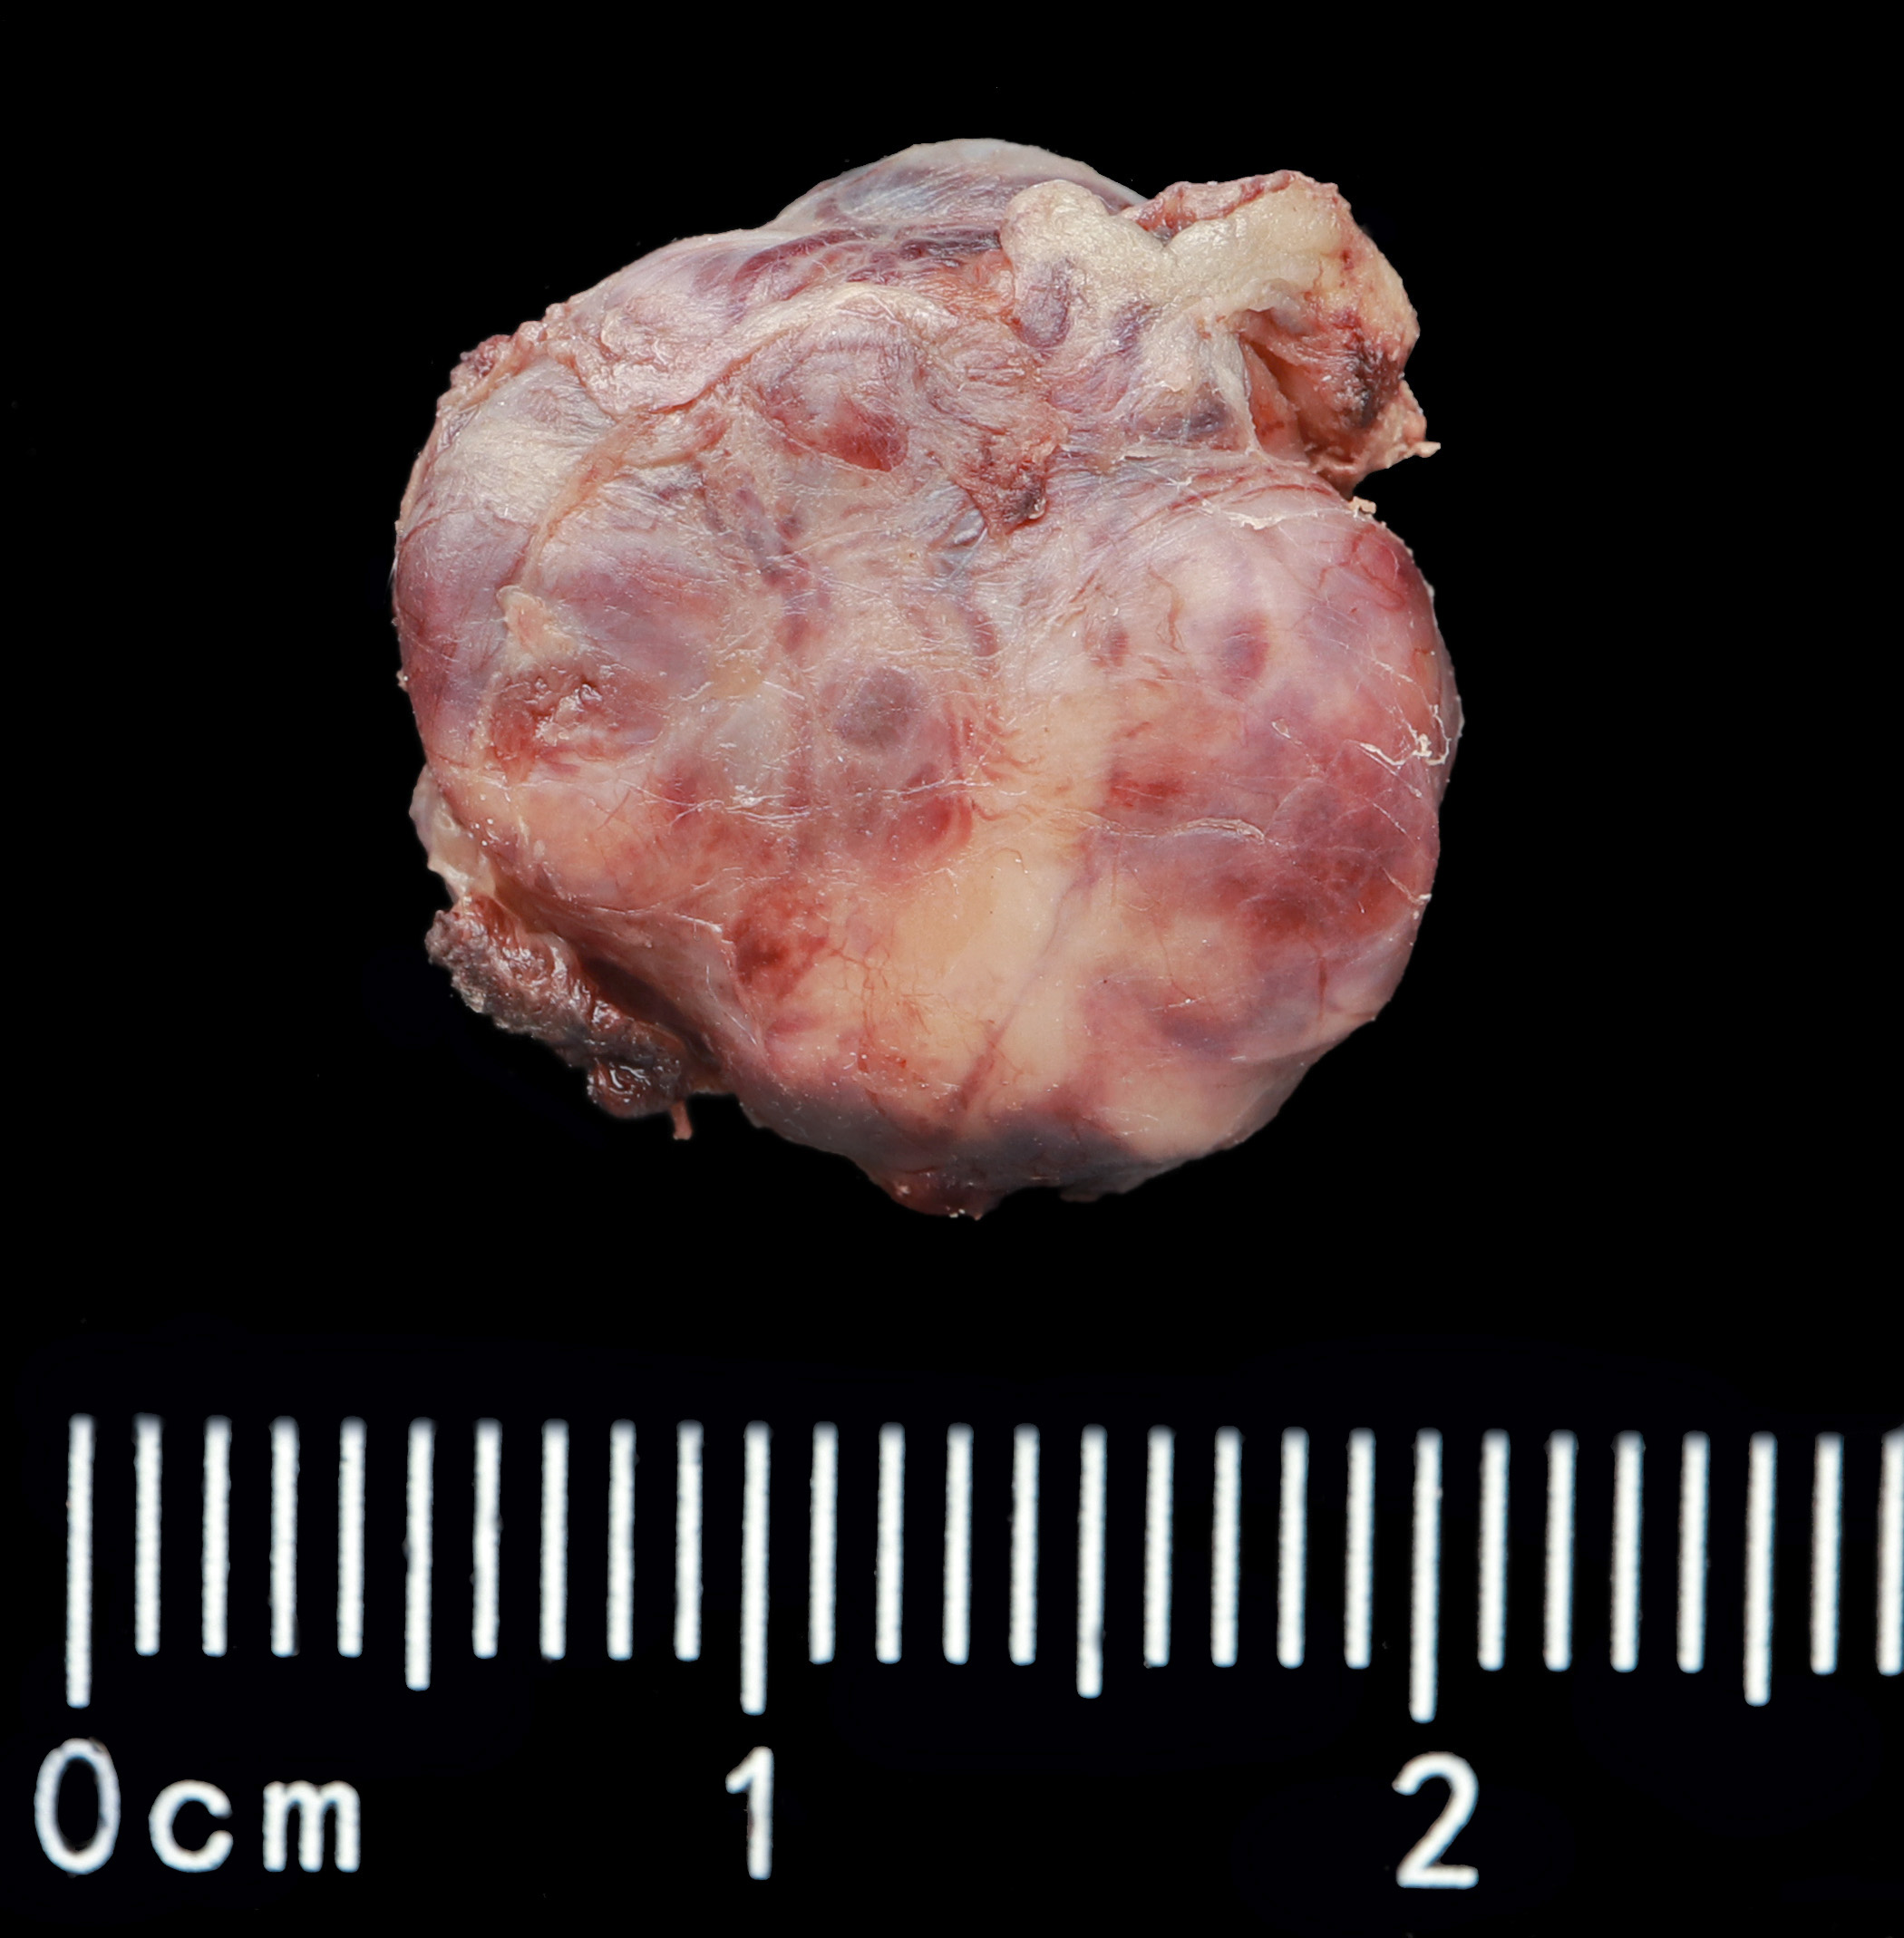 Parathyroid adenoma